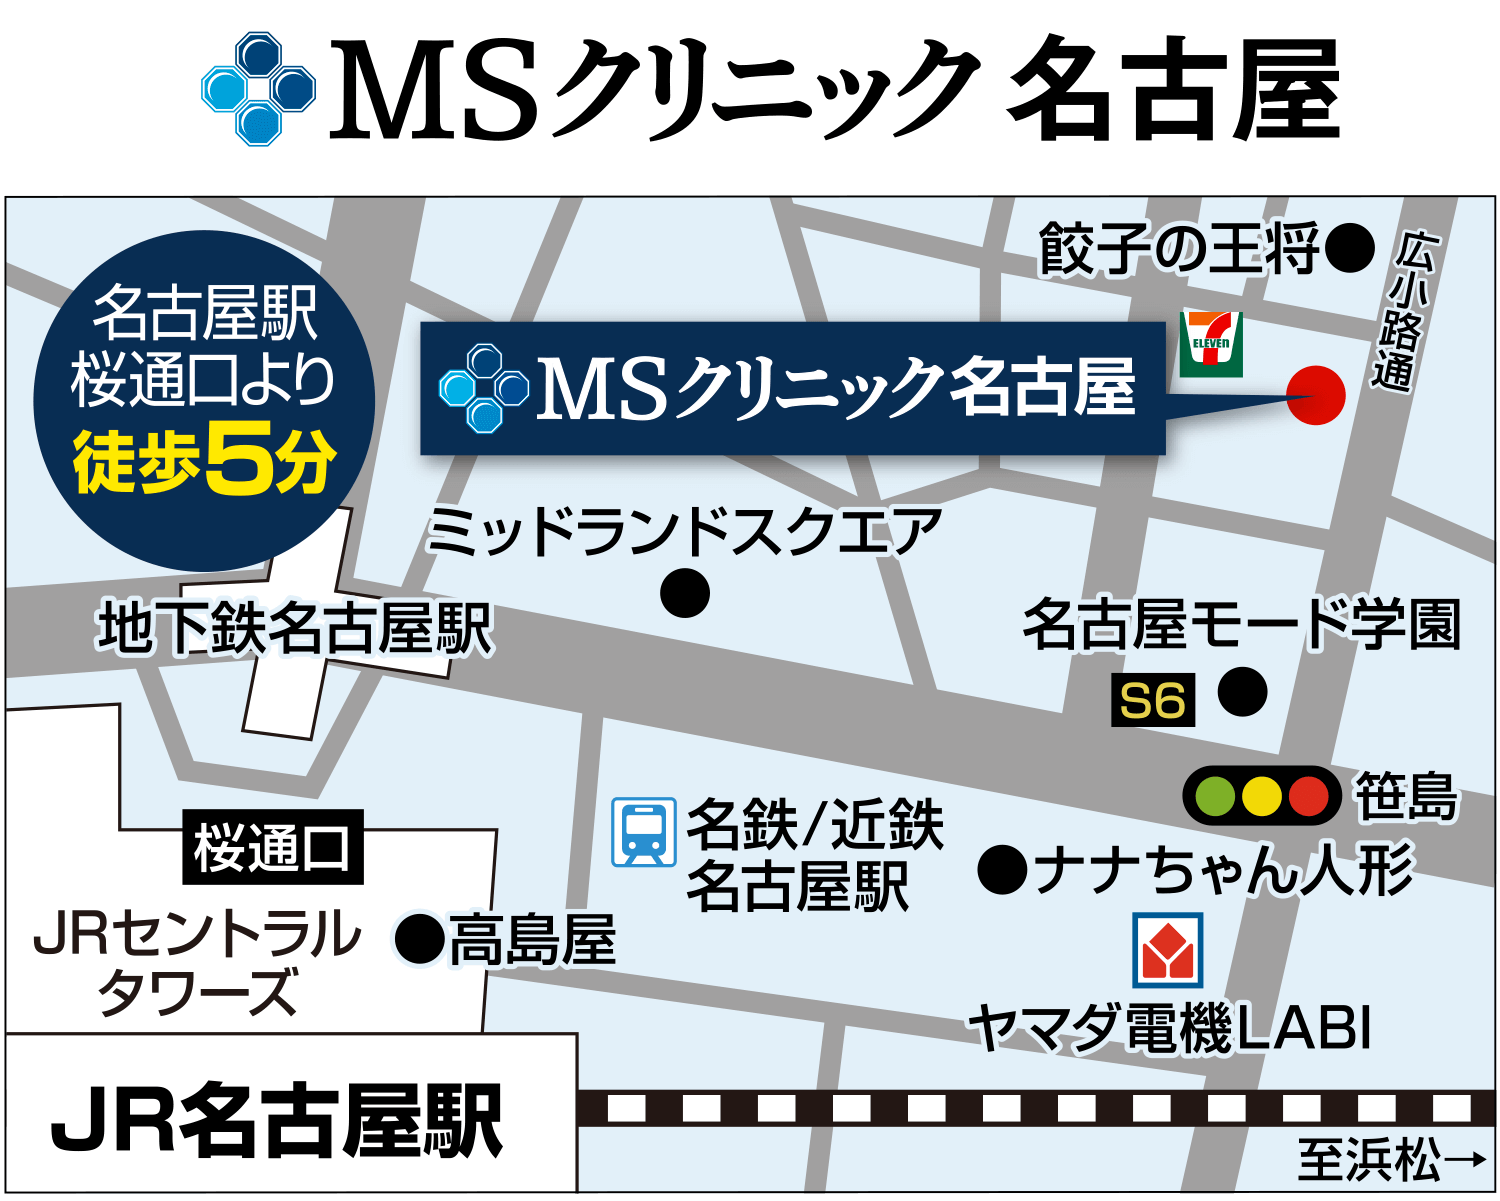 MSクリニック名古屋 アクセスマップ